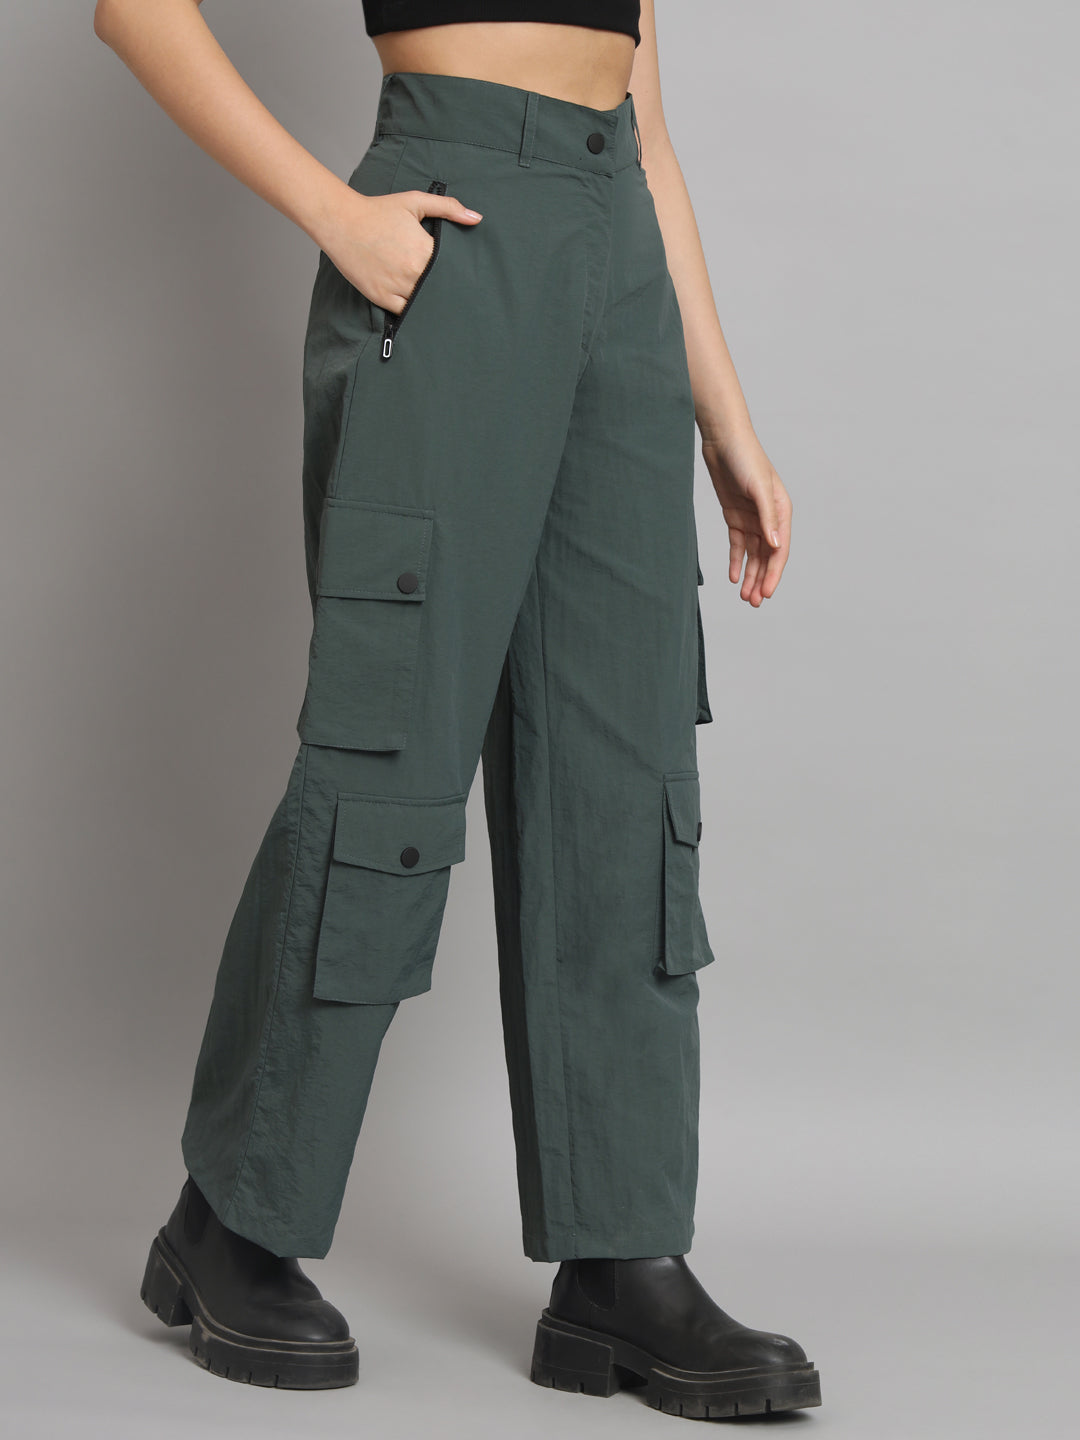 Green Parachute Pants